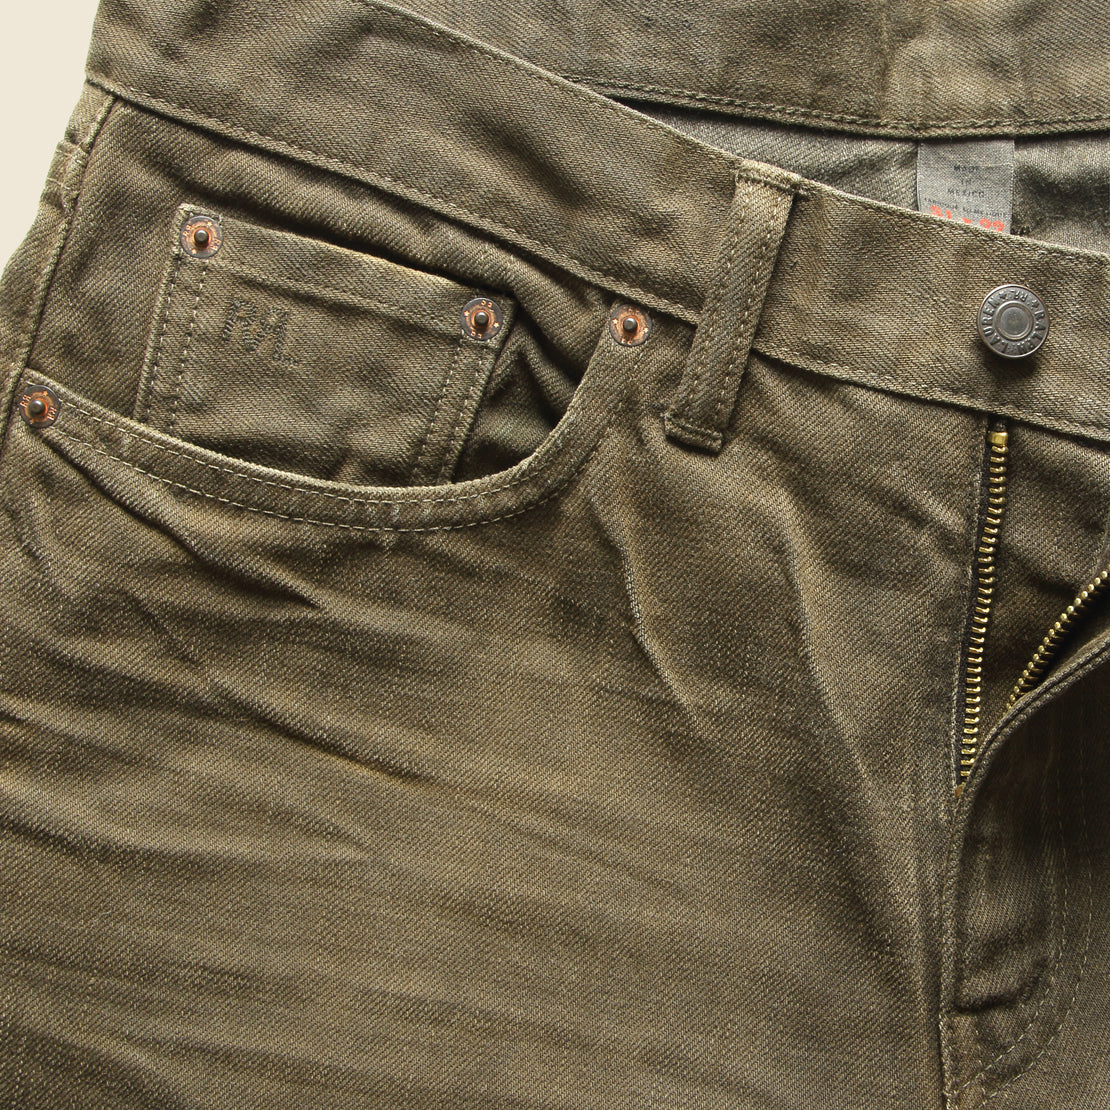 Slim Fit Jean - Distressed Brown - RRL - STAG Provisions - Pants - Denim